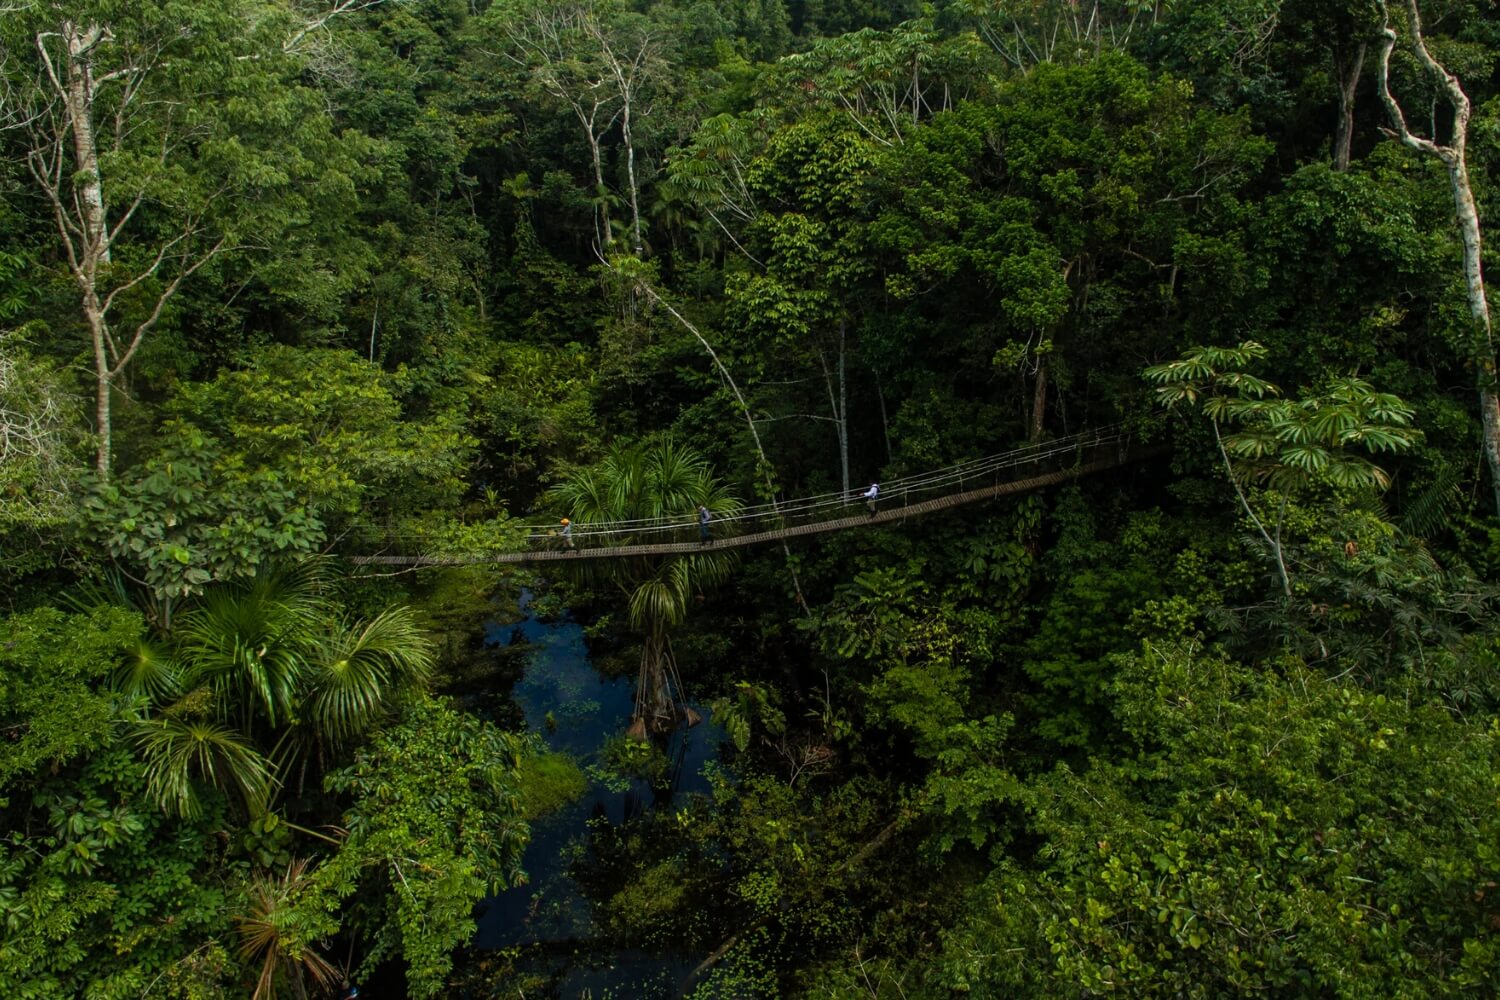 DER AMAZONAS REGENWALD BEDECKT ENORME 6,7 MILLIONEN QUADRATKILOMETER